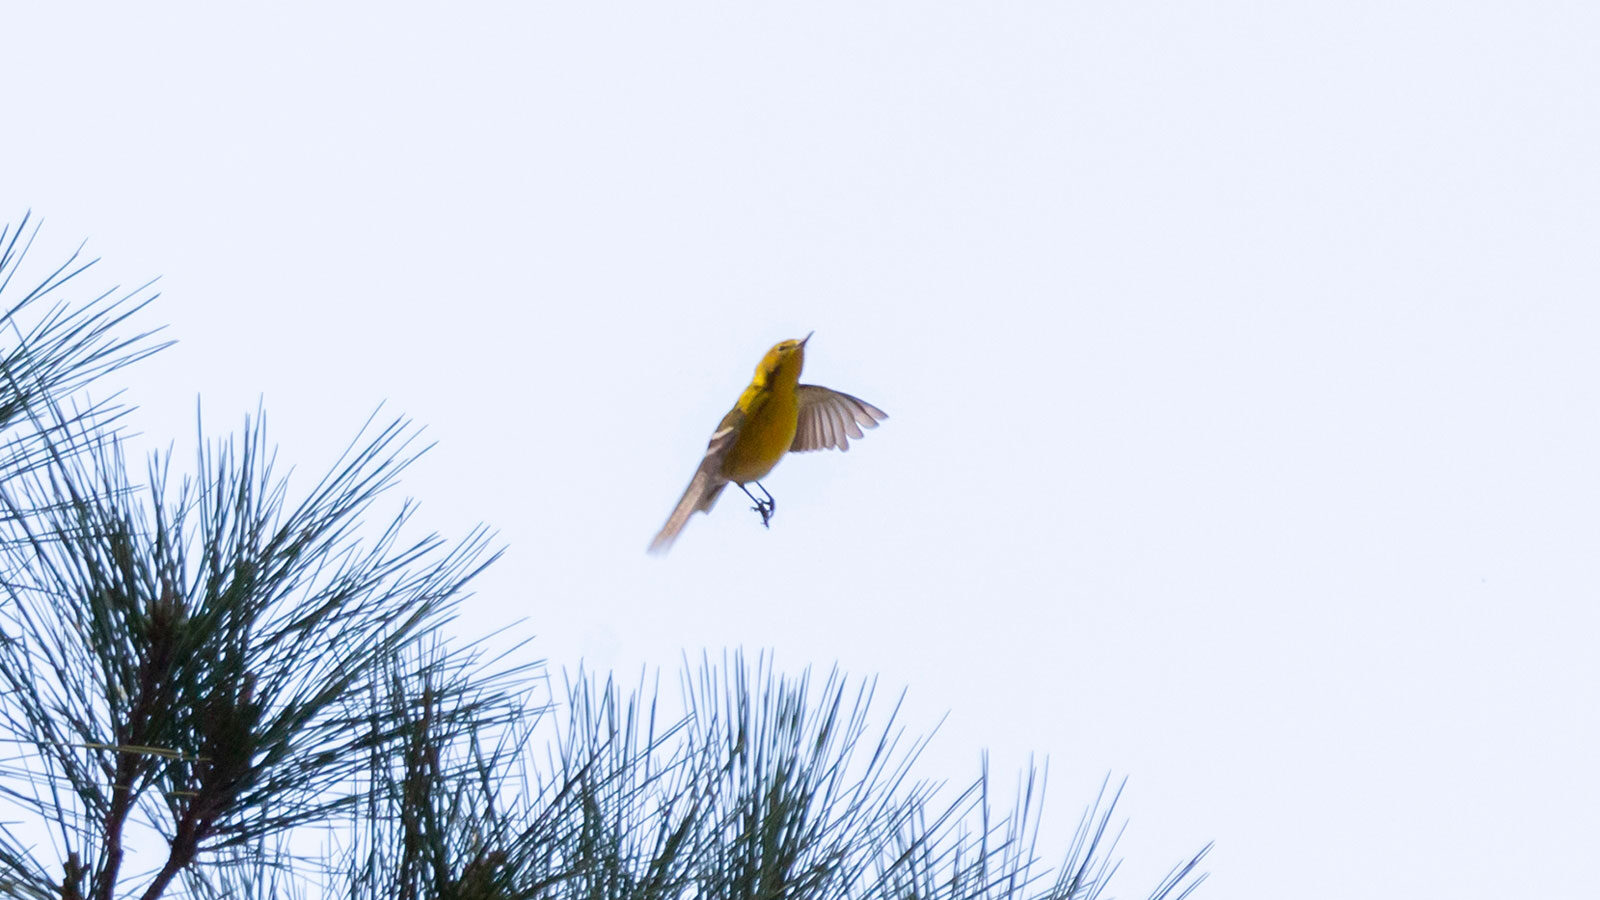 Pine warbler flying